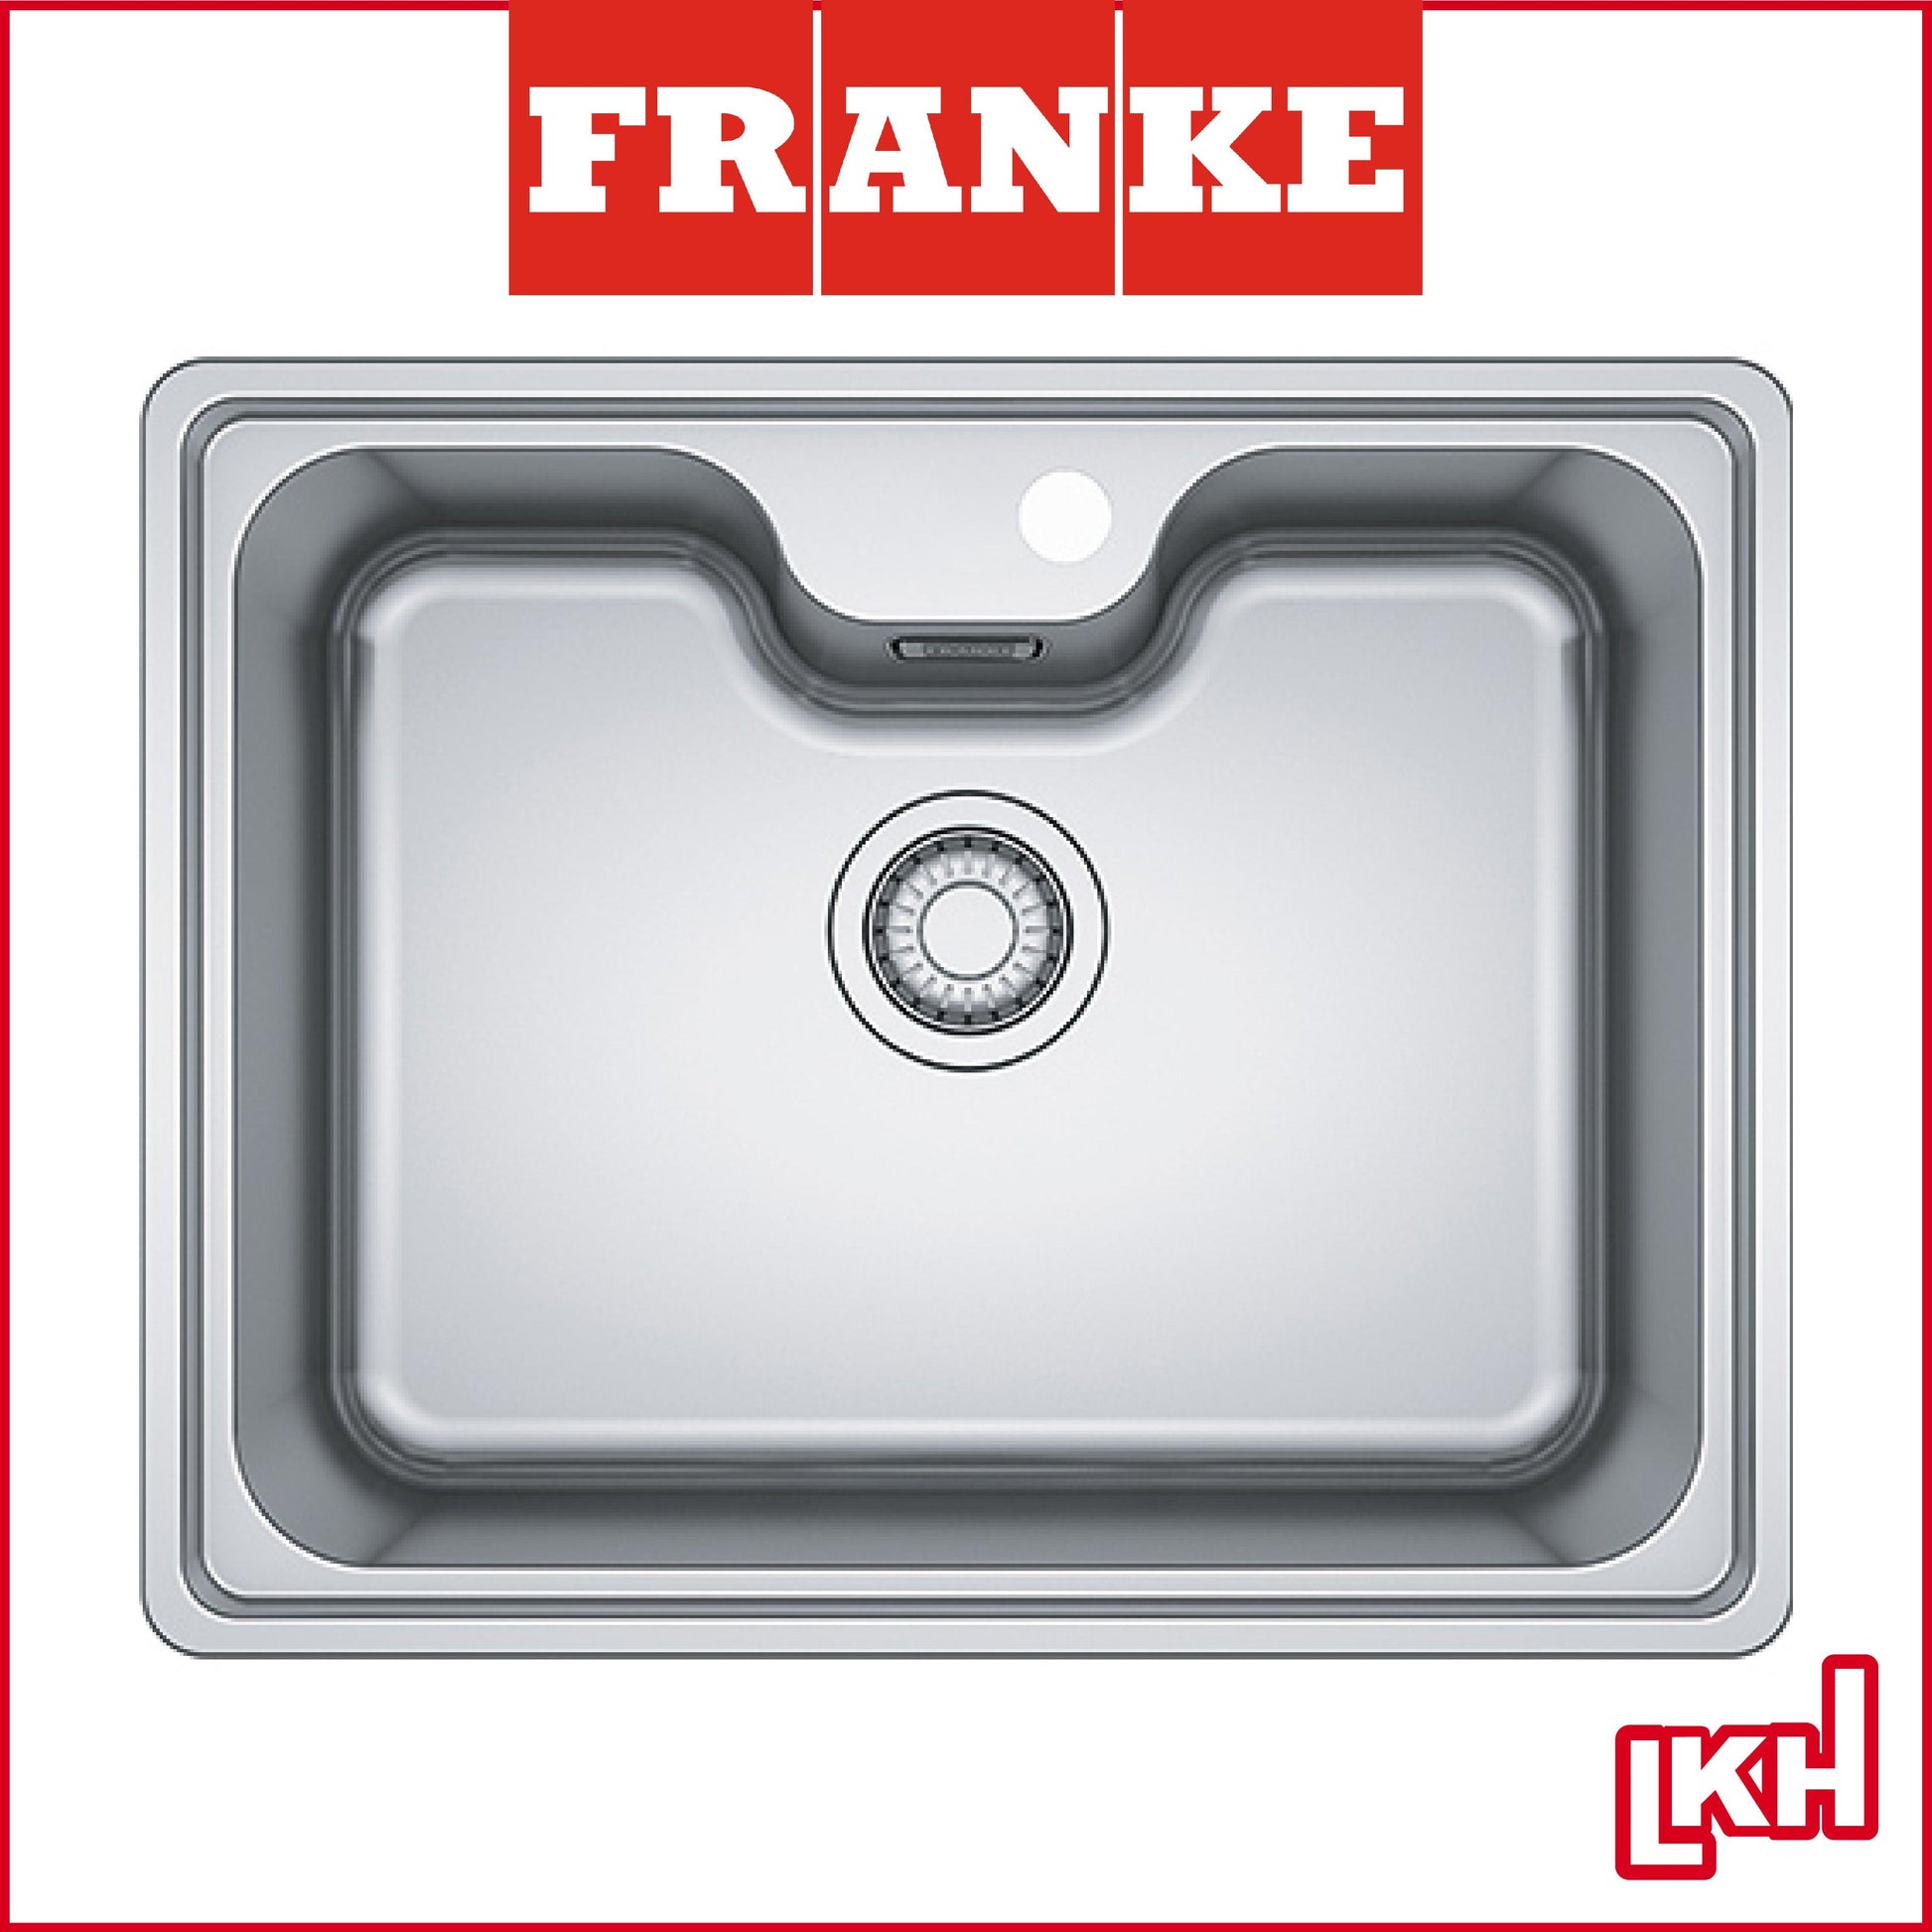 franke BCX 610-61 stainless steel single bowl top mount kitchen sink